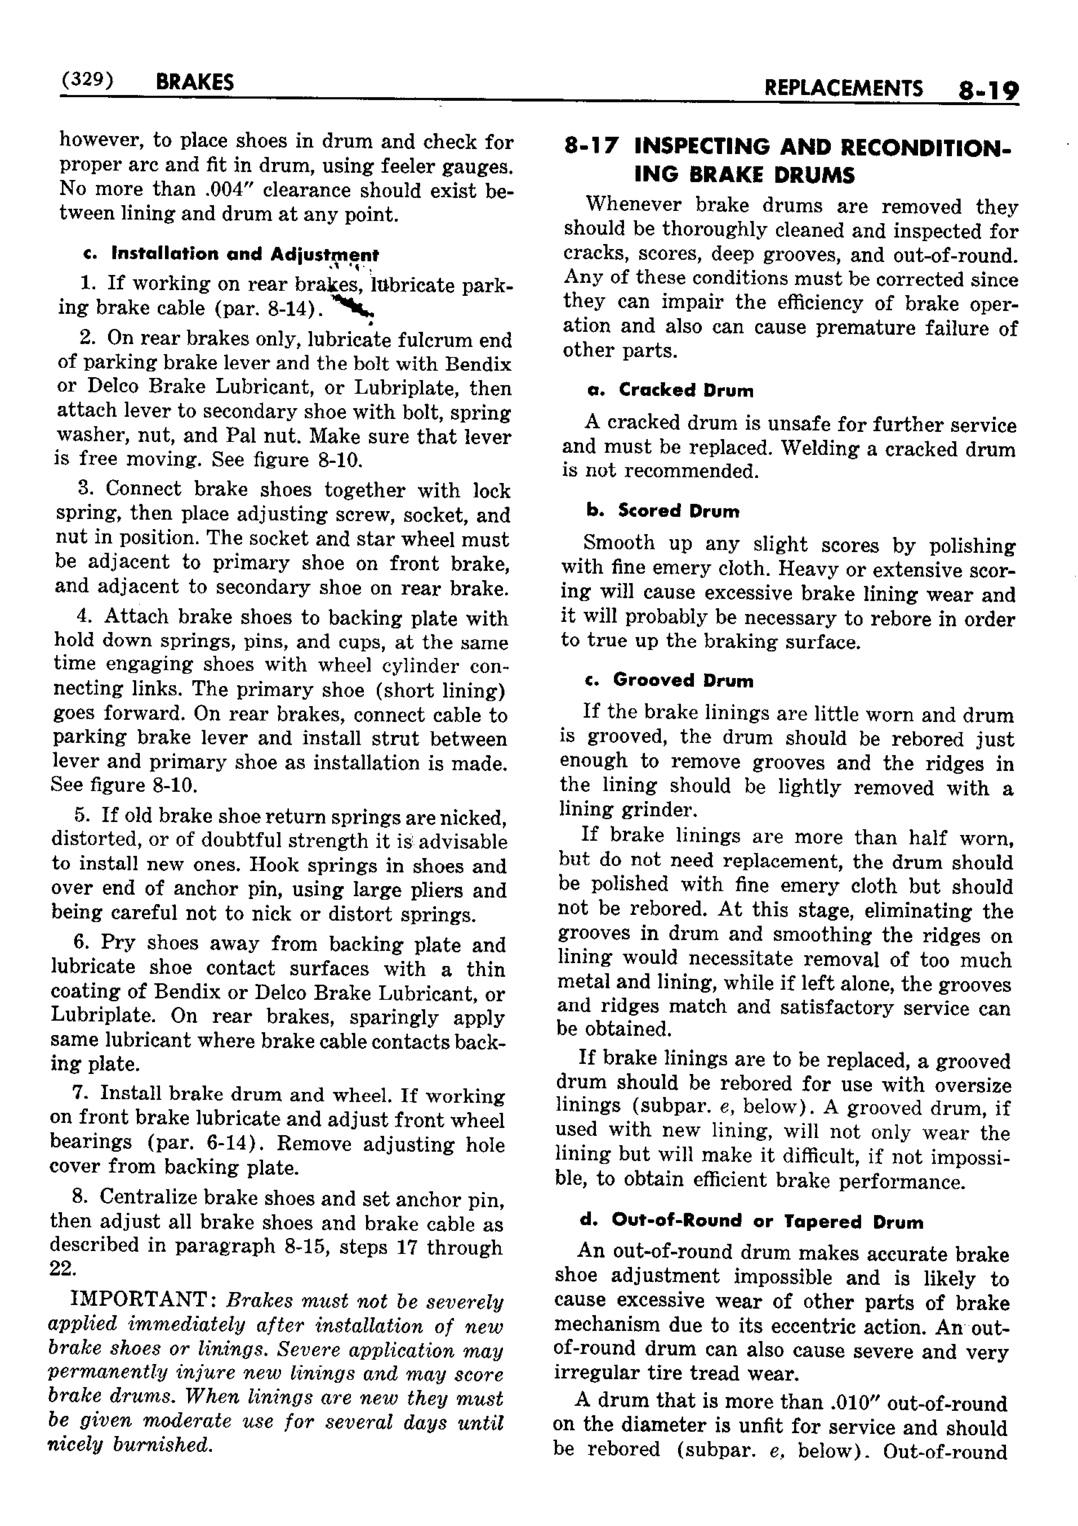 n_09 1952 Buick Shop Manual - Brakes-019-019.jpg